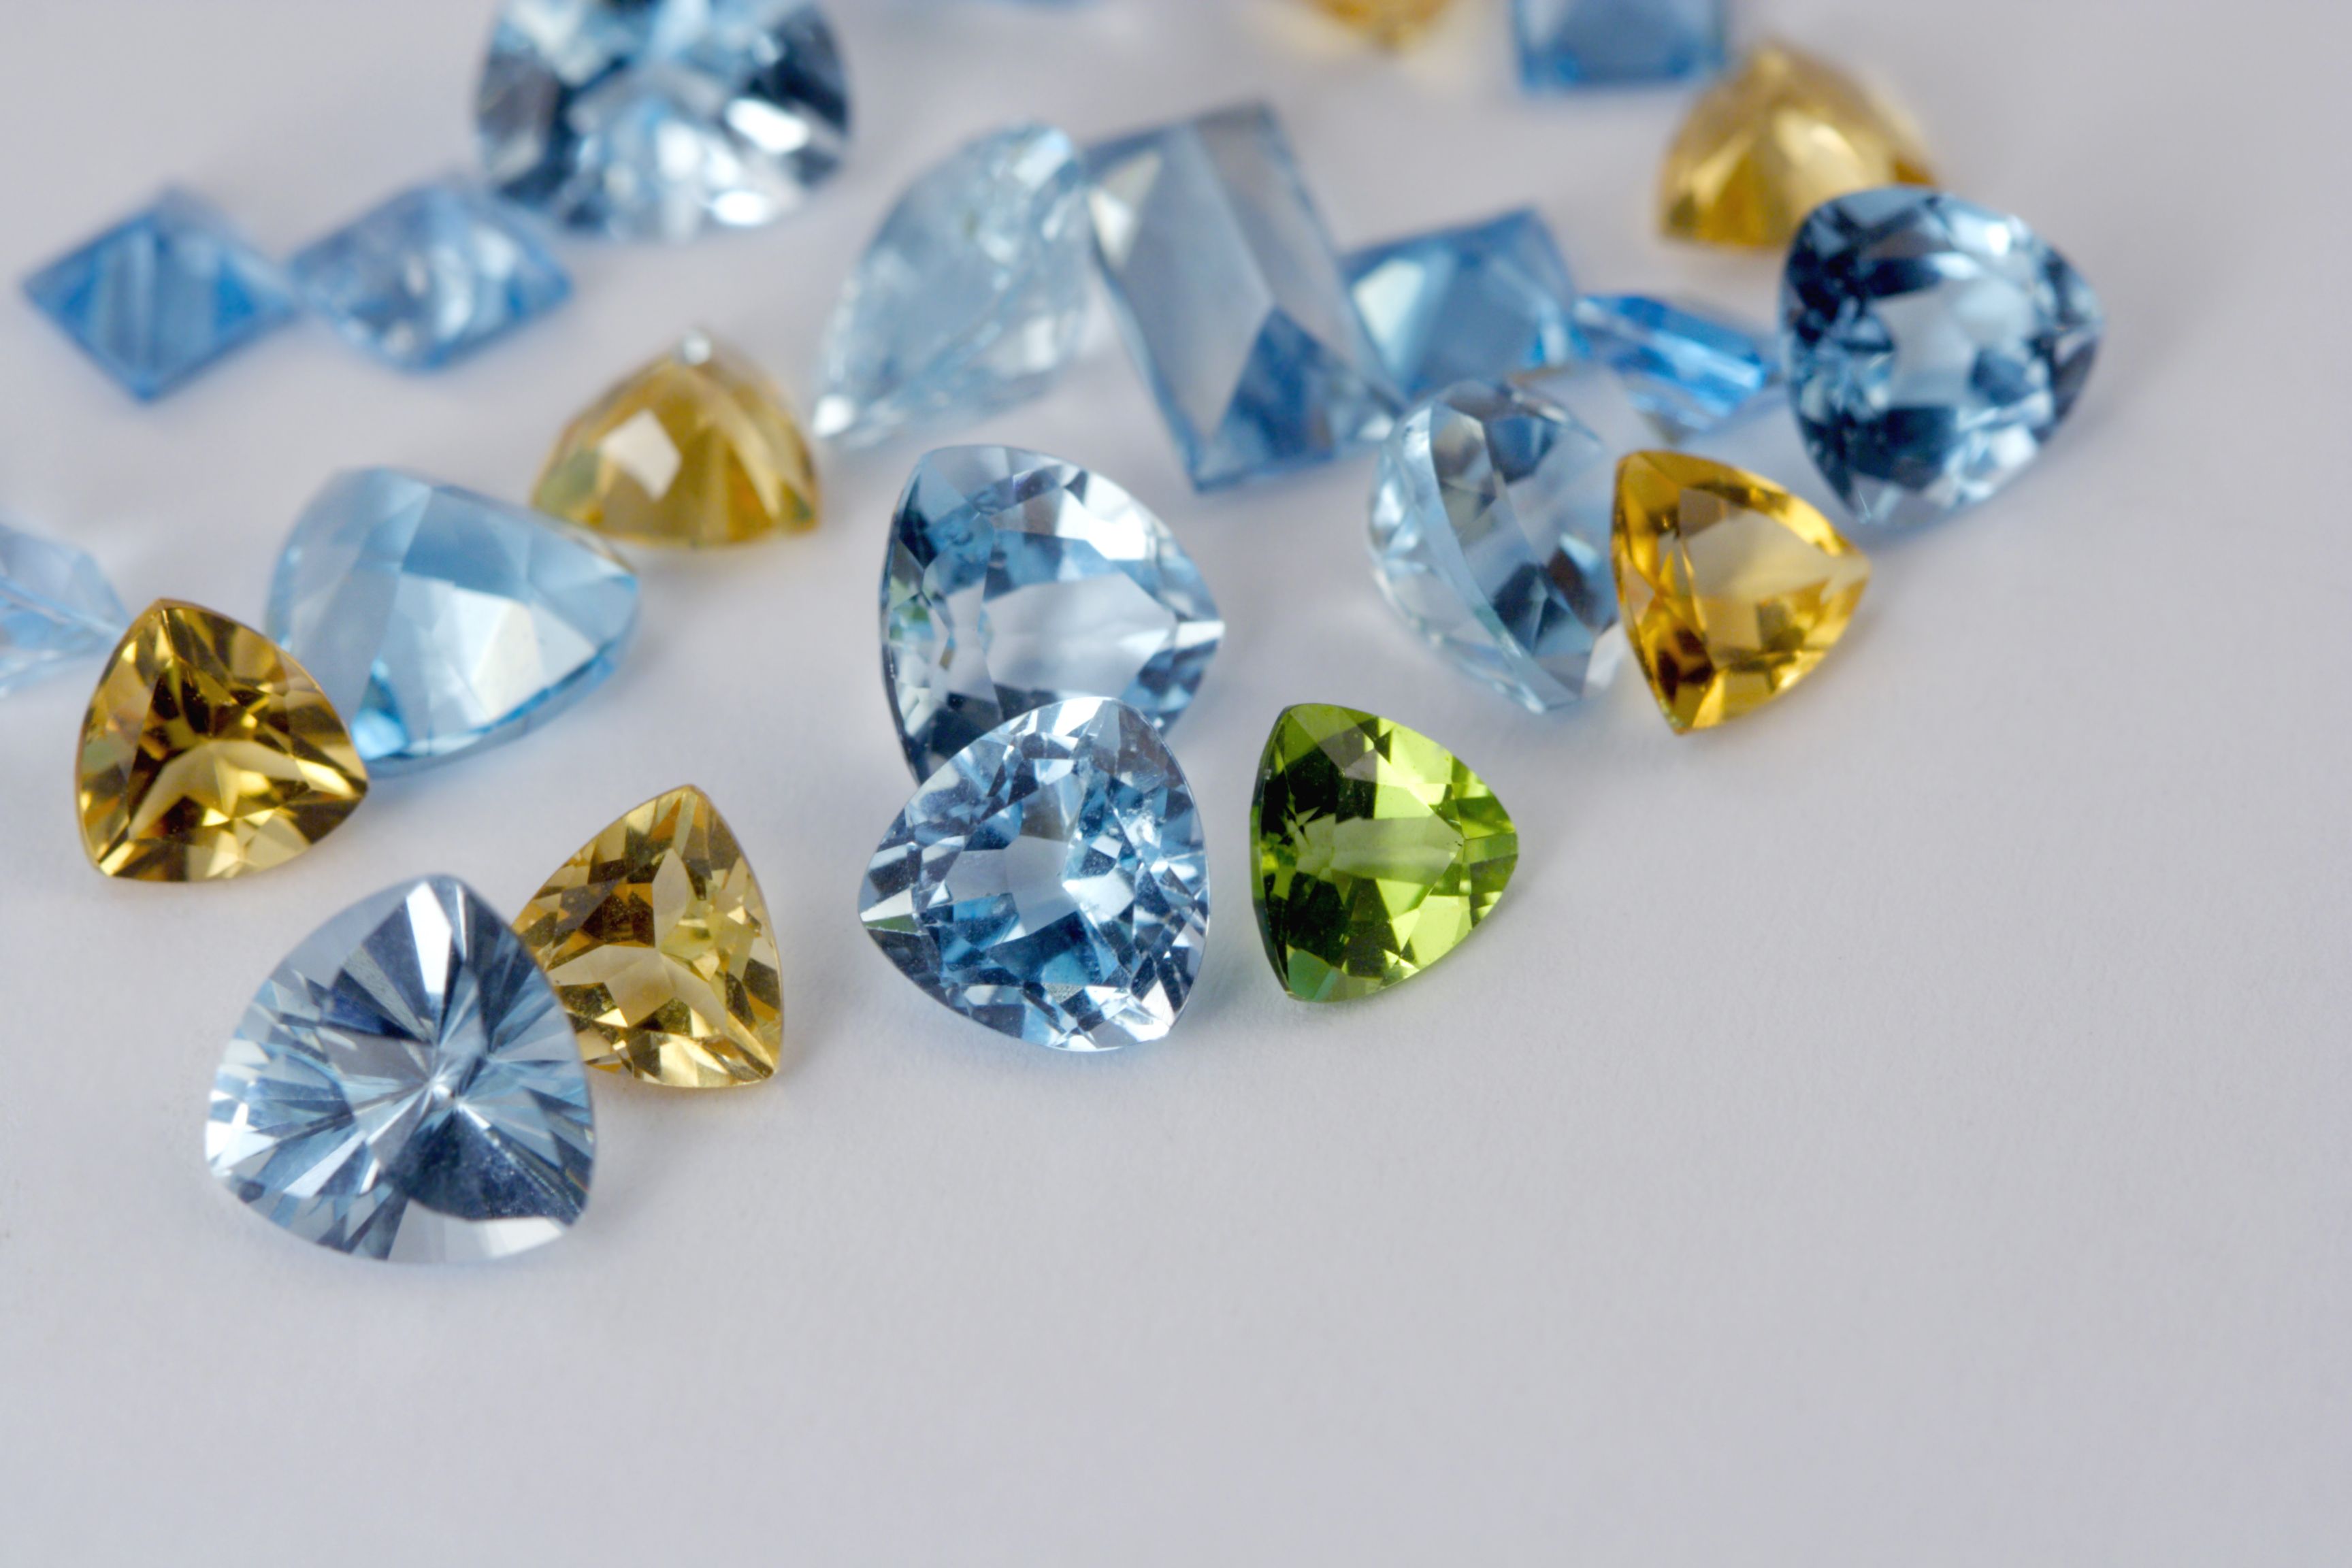 Finally, the Full Story on Lab Grown Diamonds